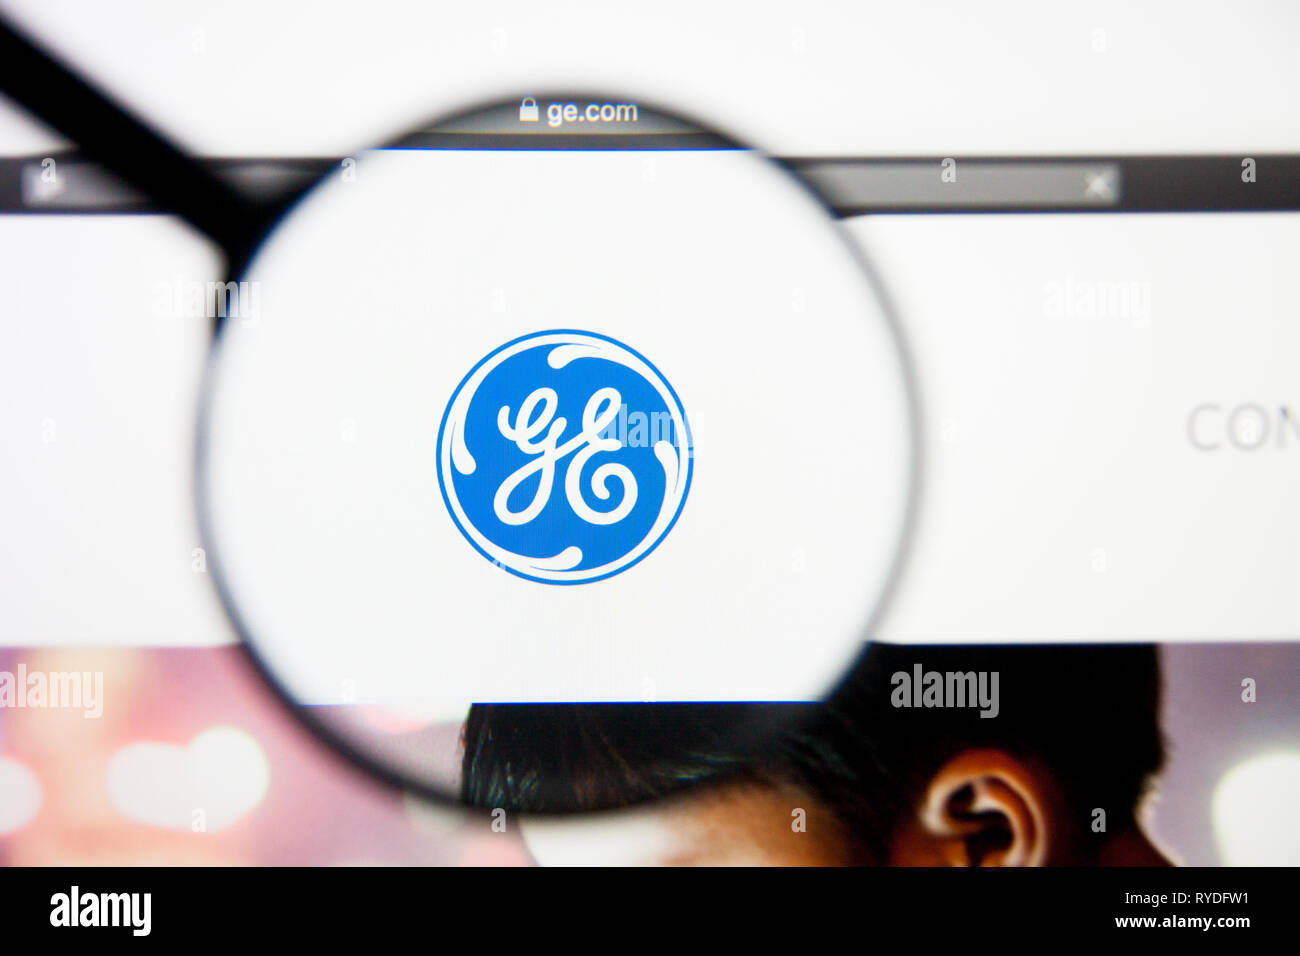 Los Angeles, Kalifornien, USA - 5. März 2019: General Electric Homepage. General Electric Logo sichtbar auf dem Display, Illustrative Stockfoto